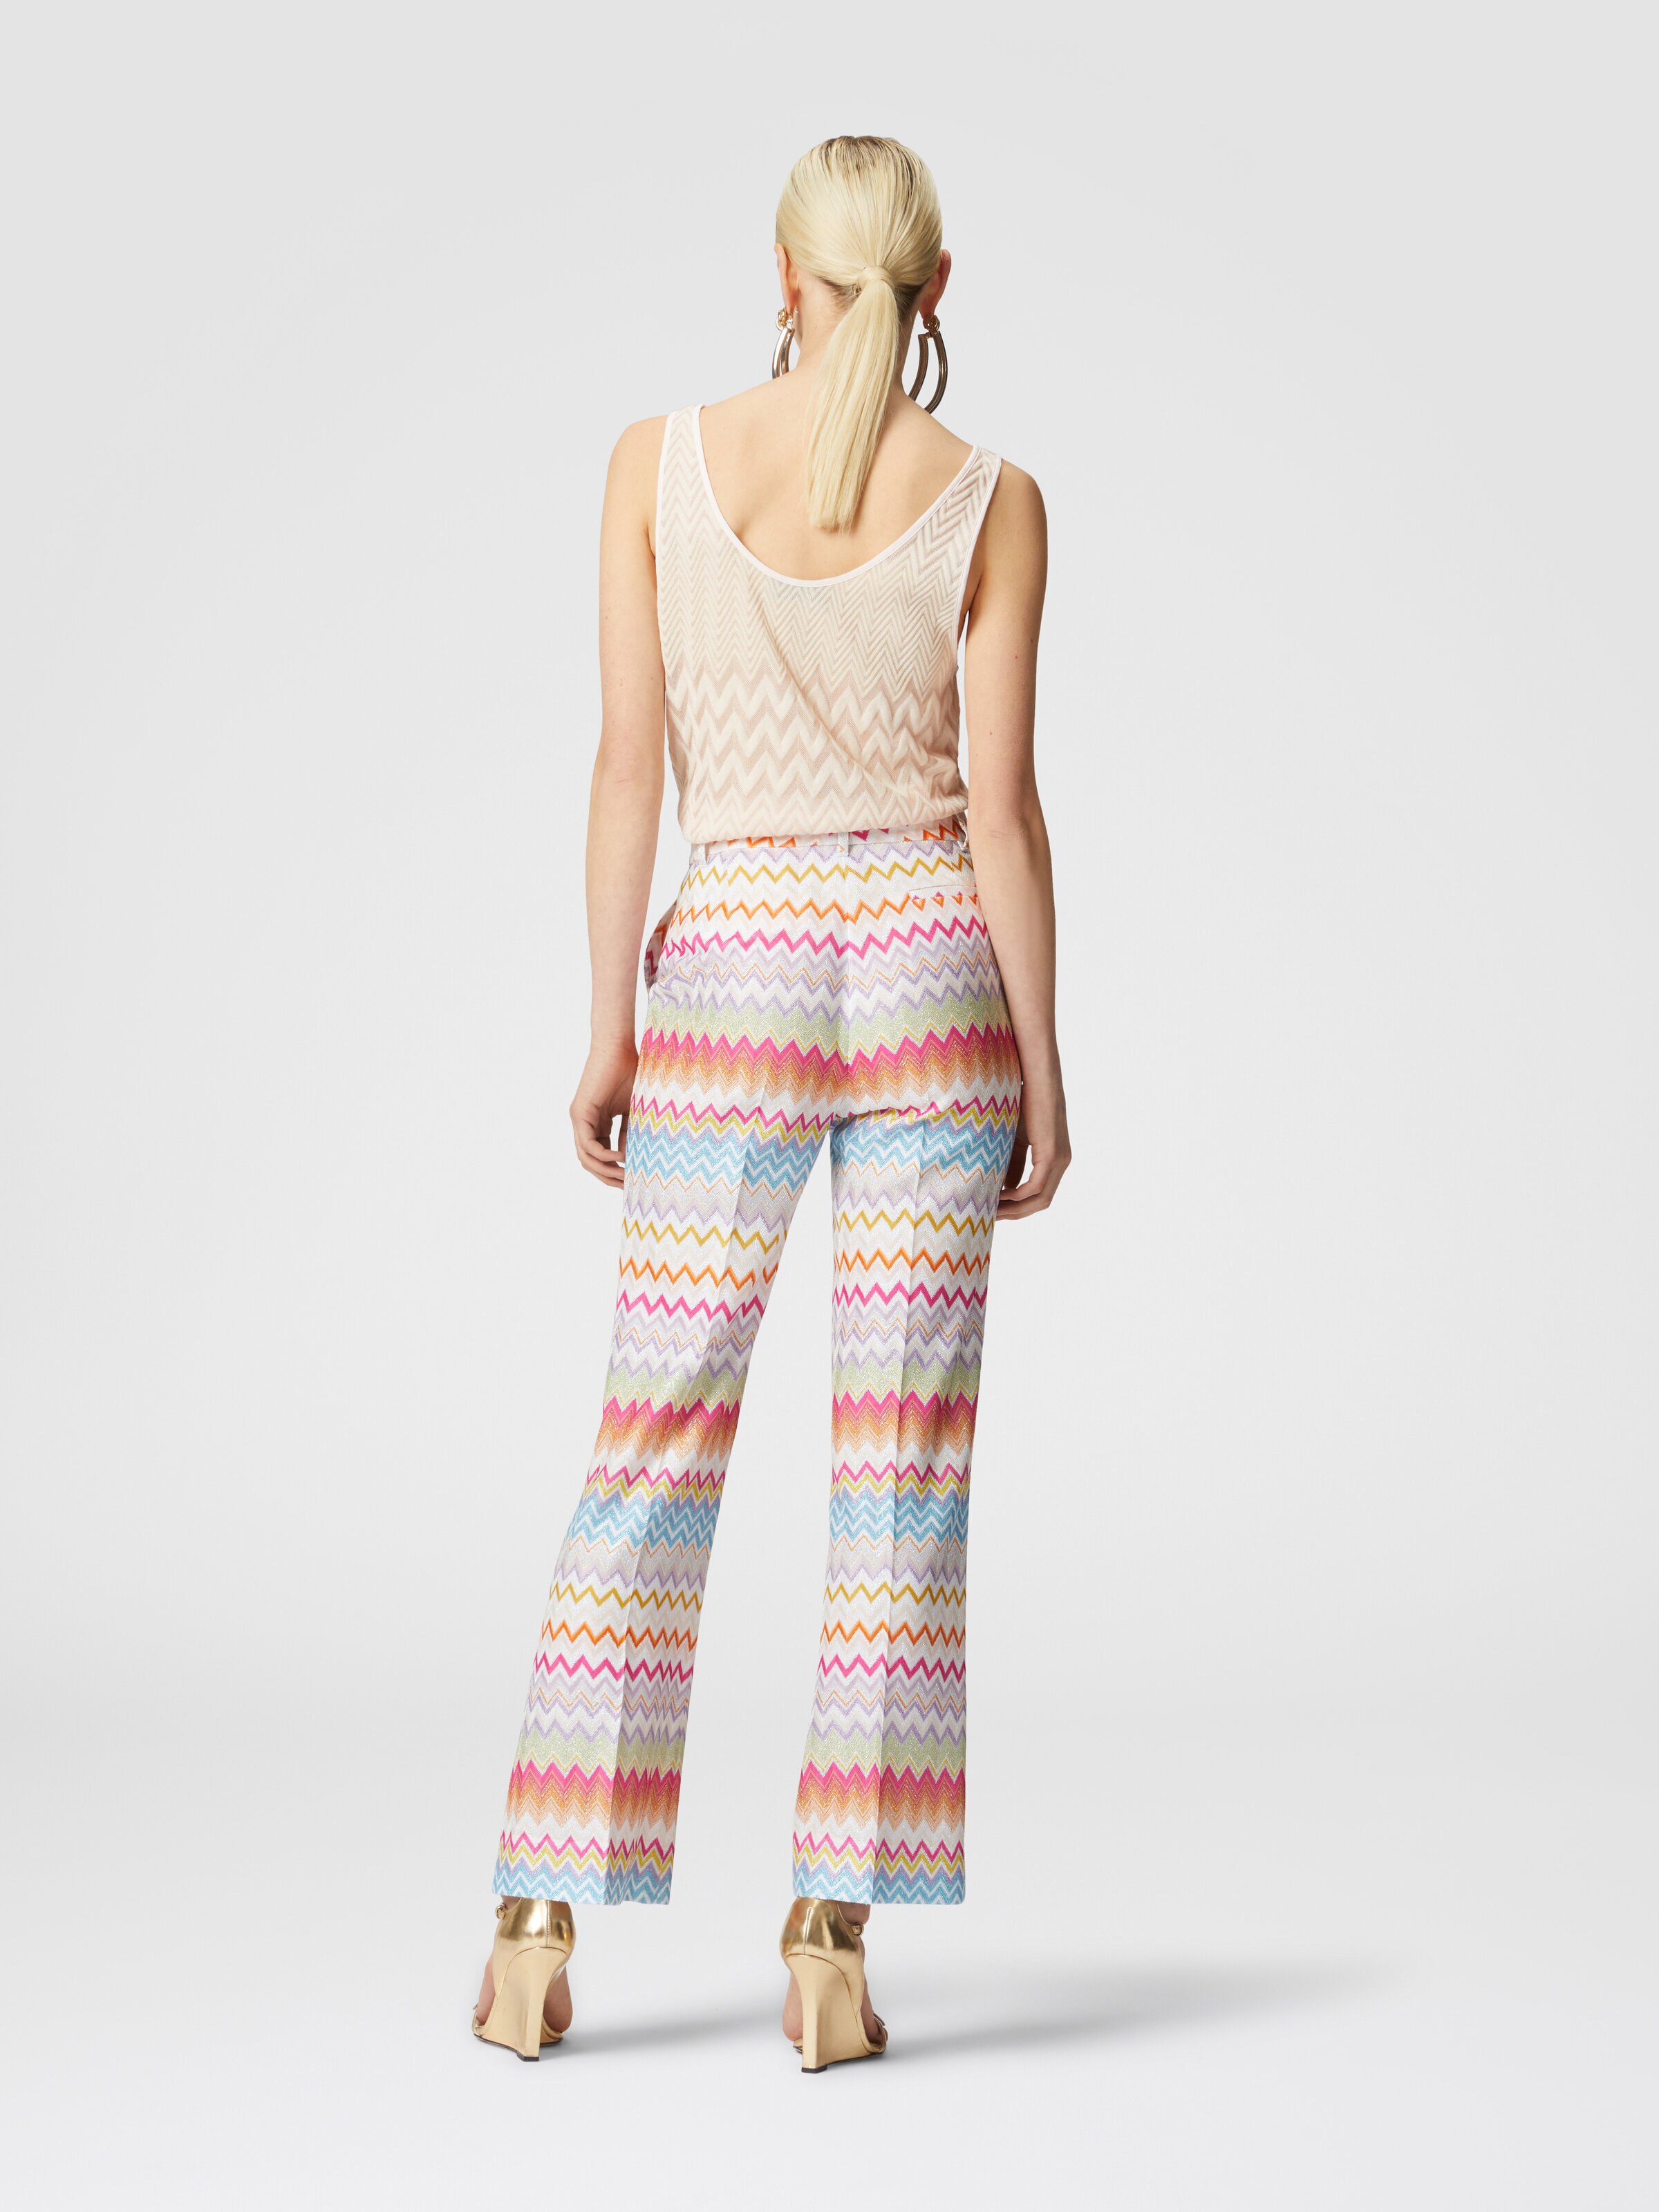 Capri trousers in chevron lamé knit with sequins, Multicoloured  - 2